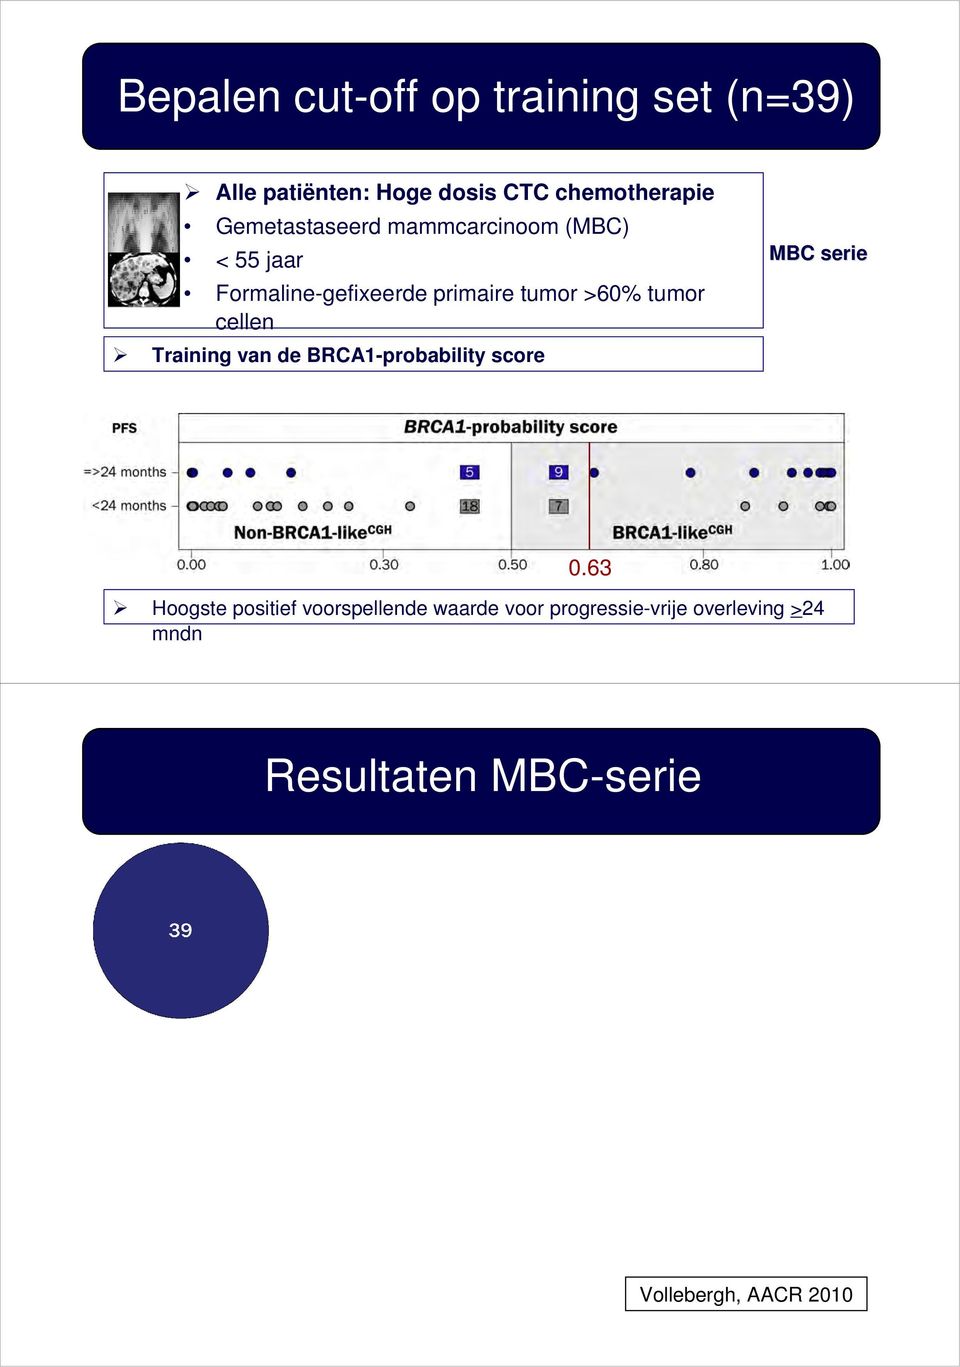 tumor cellen Training van de BRCA1-probability score MBC serie 0.